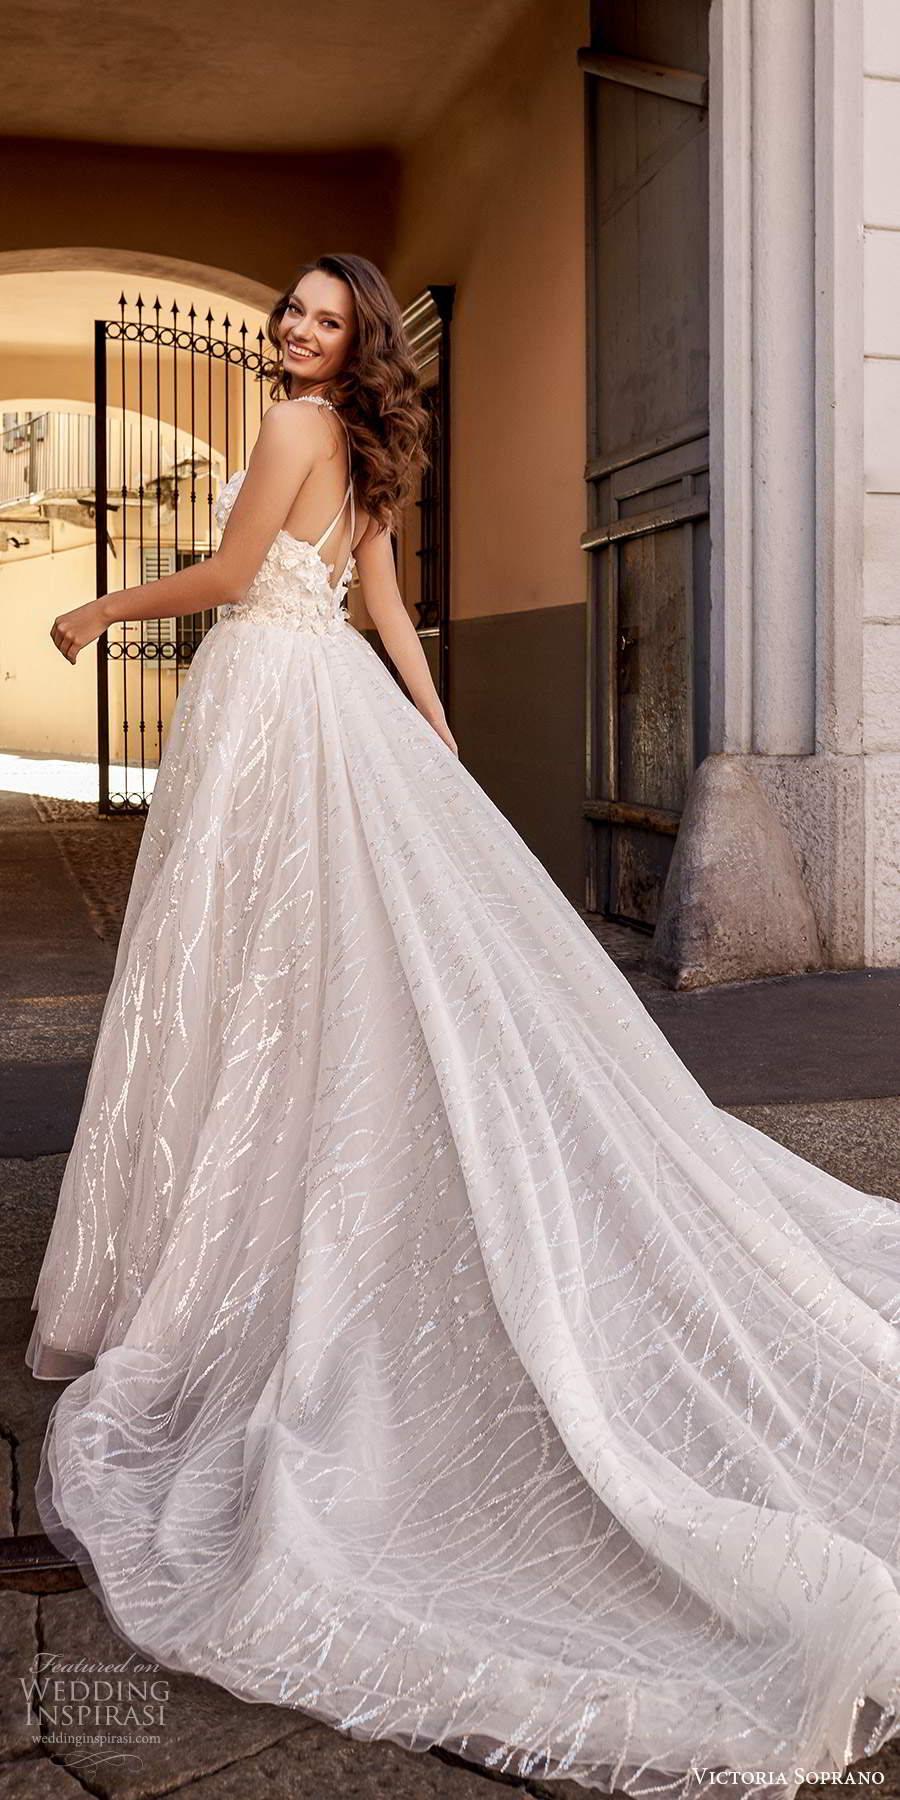 victoria soprano fall 2020 bridal sleeveless thin straps fully embellished mermaid wedding dress chapel train ball gown overskirt (8) bv